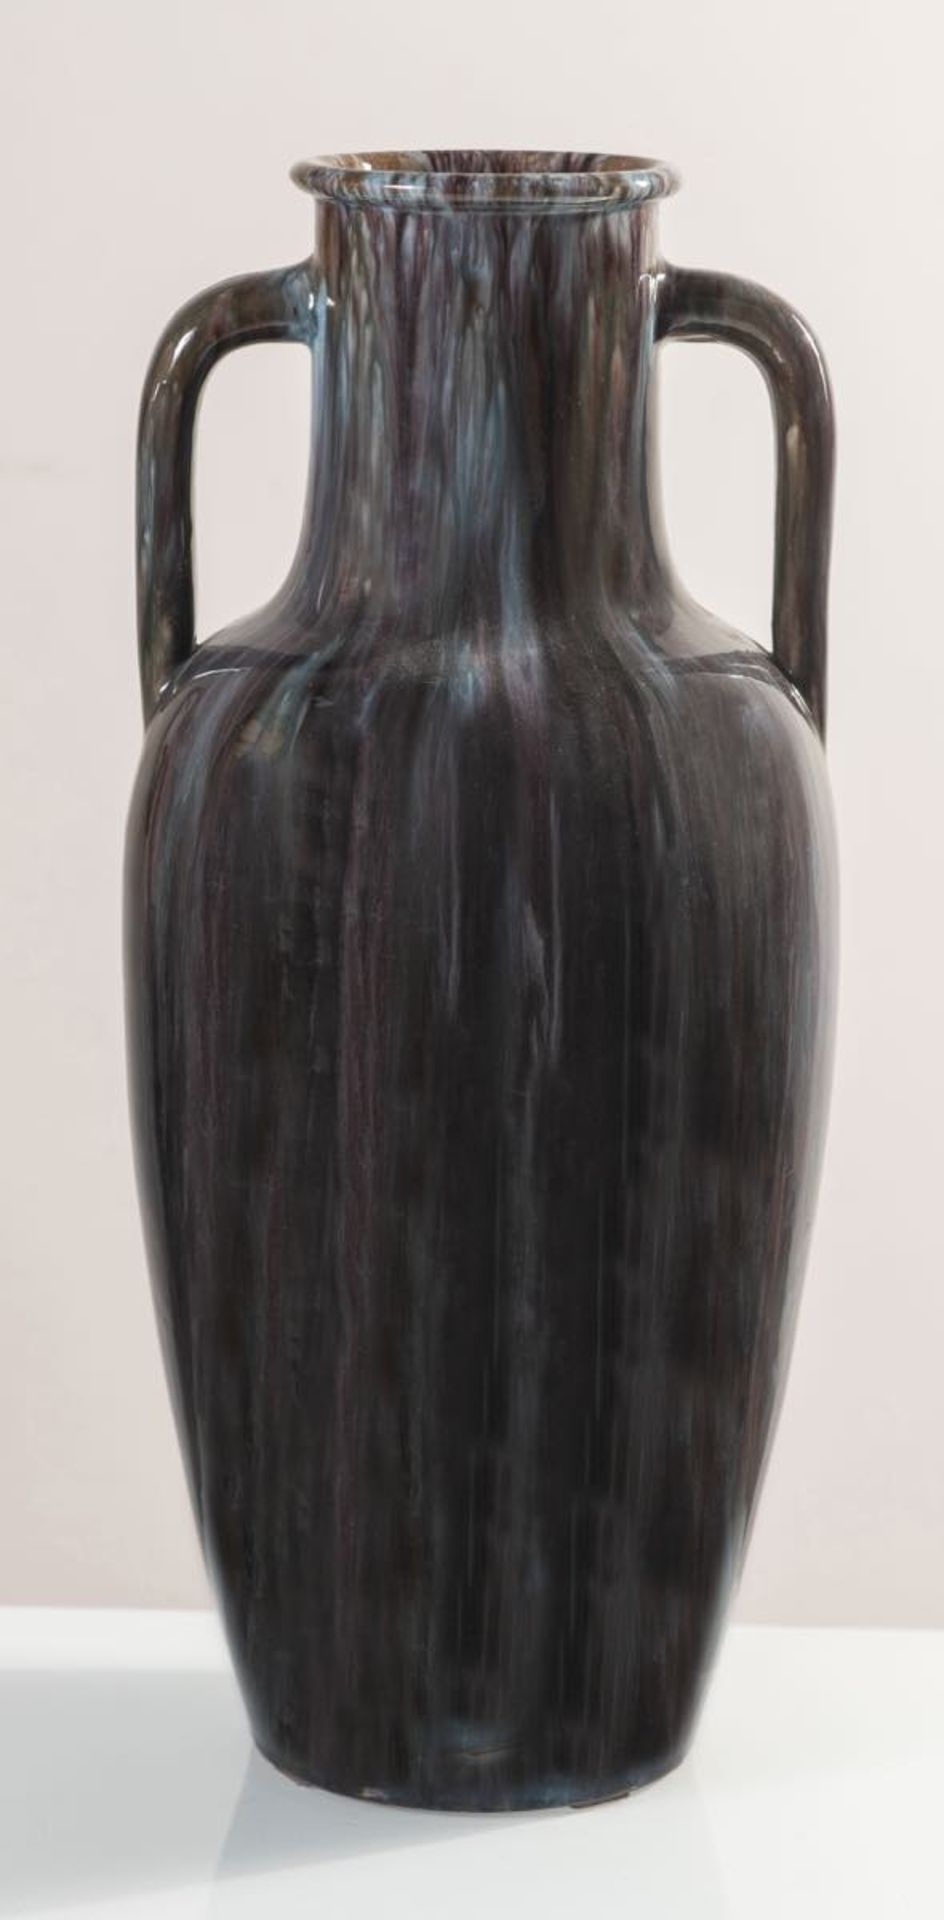 Clément Massier, Grande vaso in ceramica a foggia di anfora, Anni ‘30.Manici applicati,